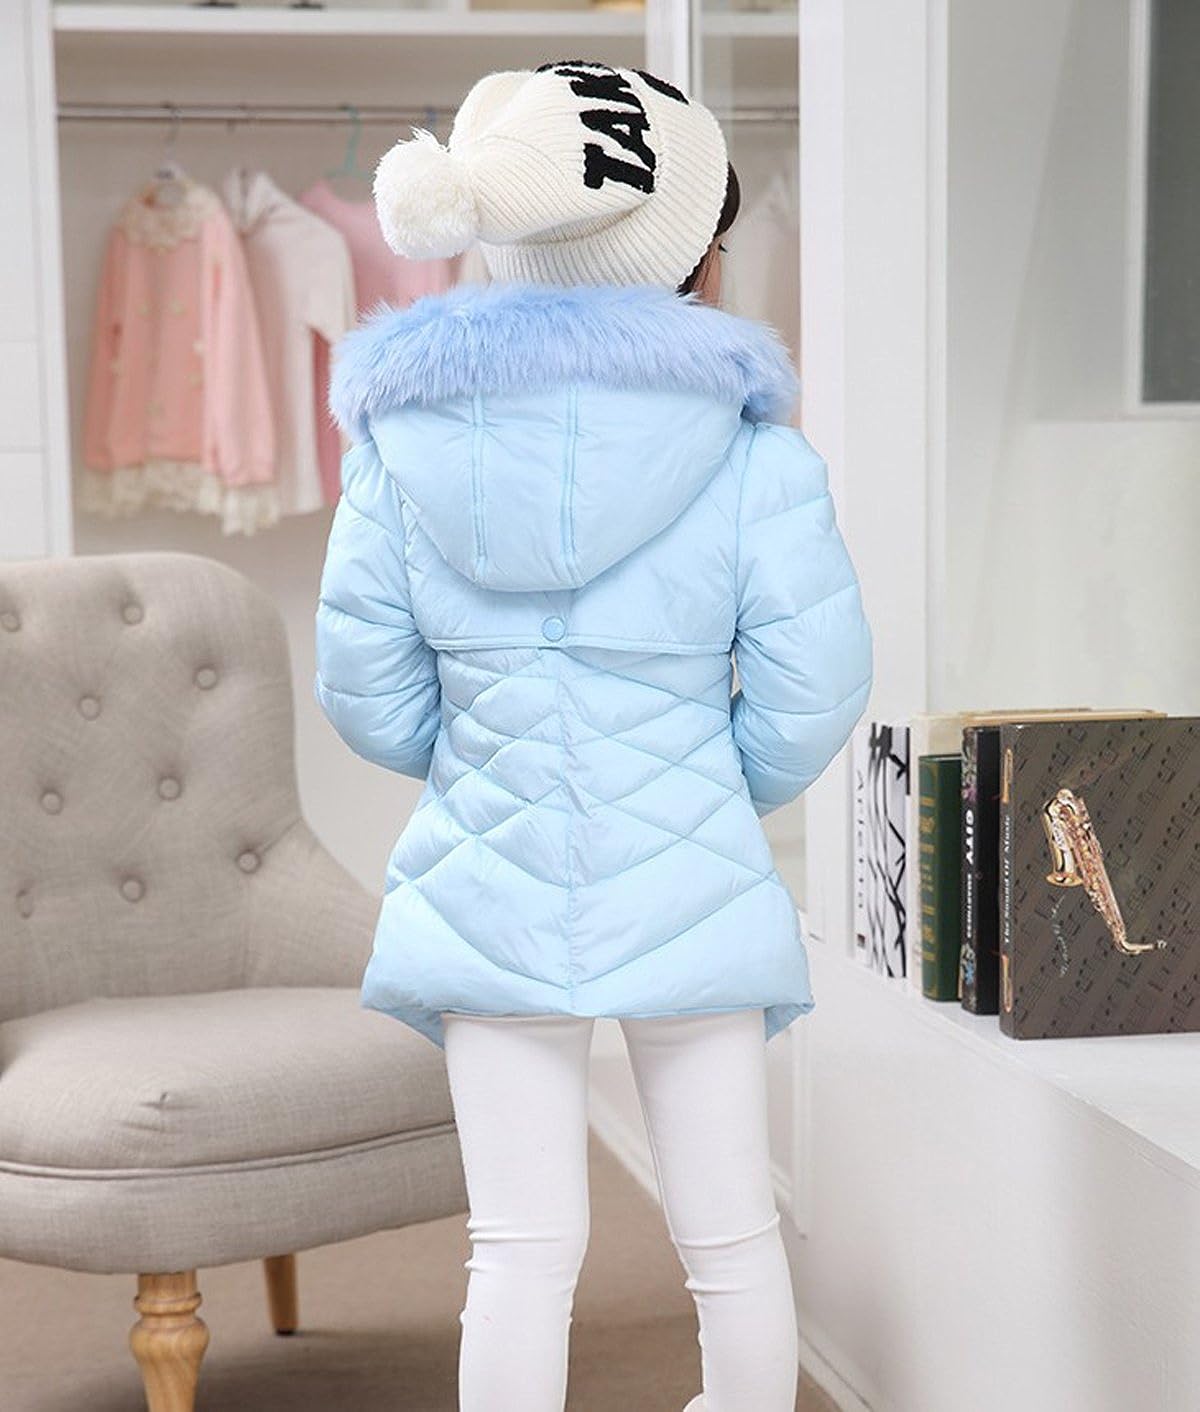 Child Kids Girls Winter Warm Jackets Coat Snowsuit Hooded Windbreaker Outwear with Soft Fur Hoodies for 3-12 Years Old